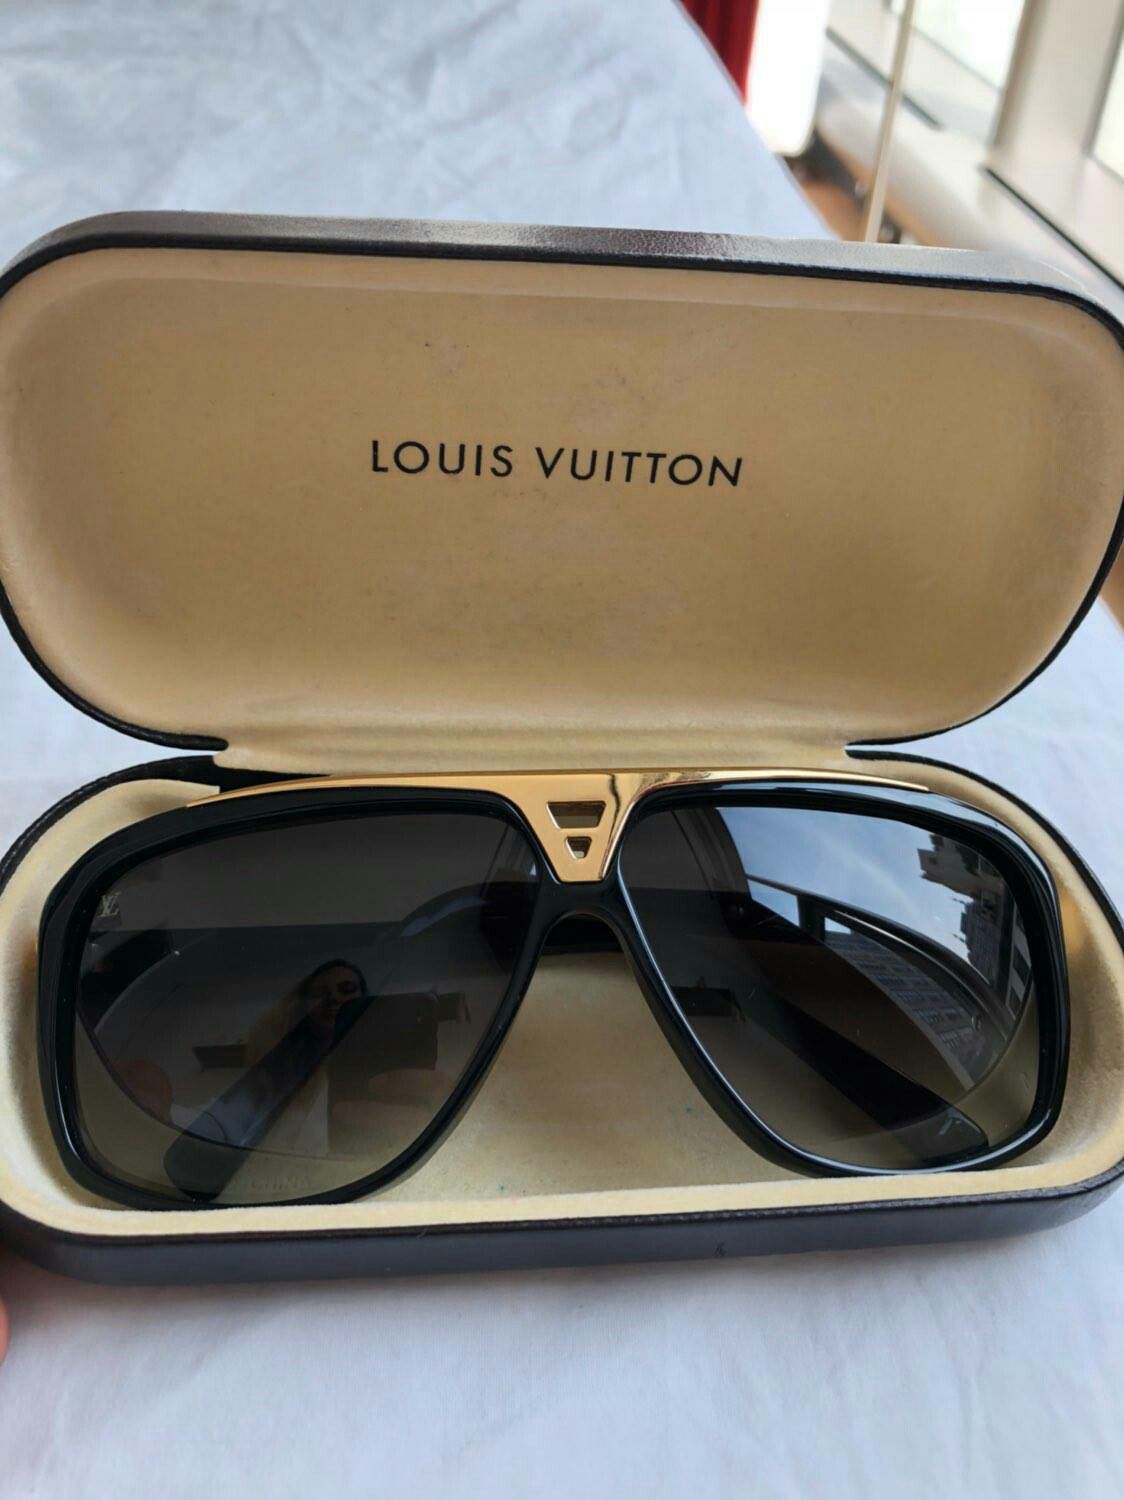 Louis Vuitton Sunglasses for Sale in Slidell, LA - OfferUp